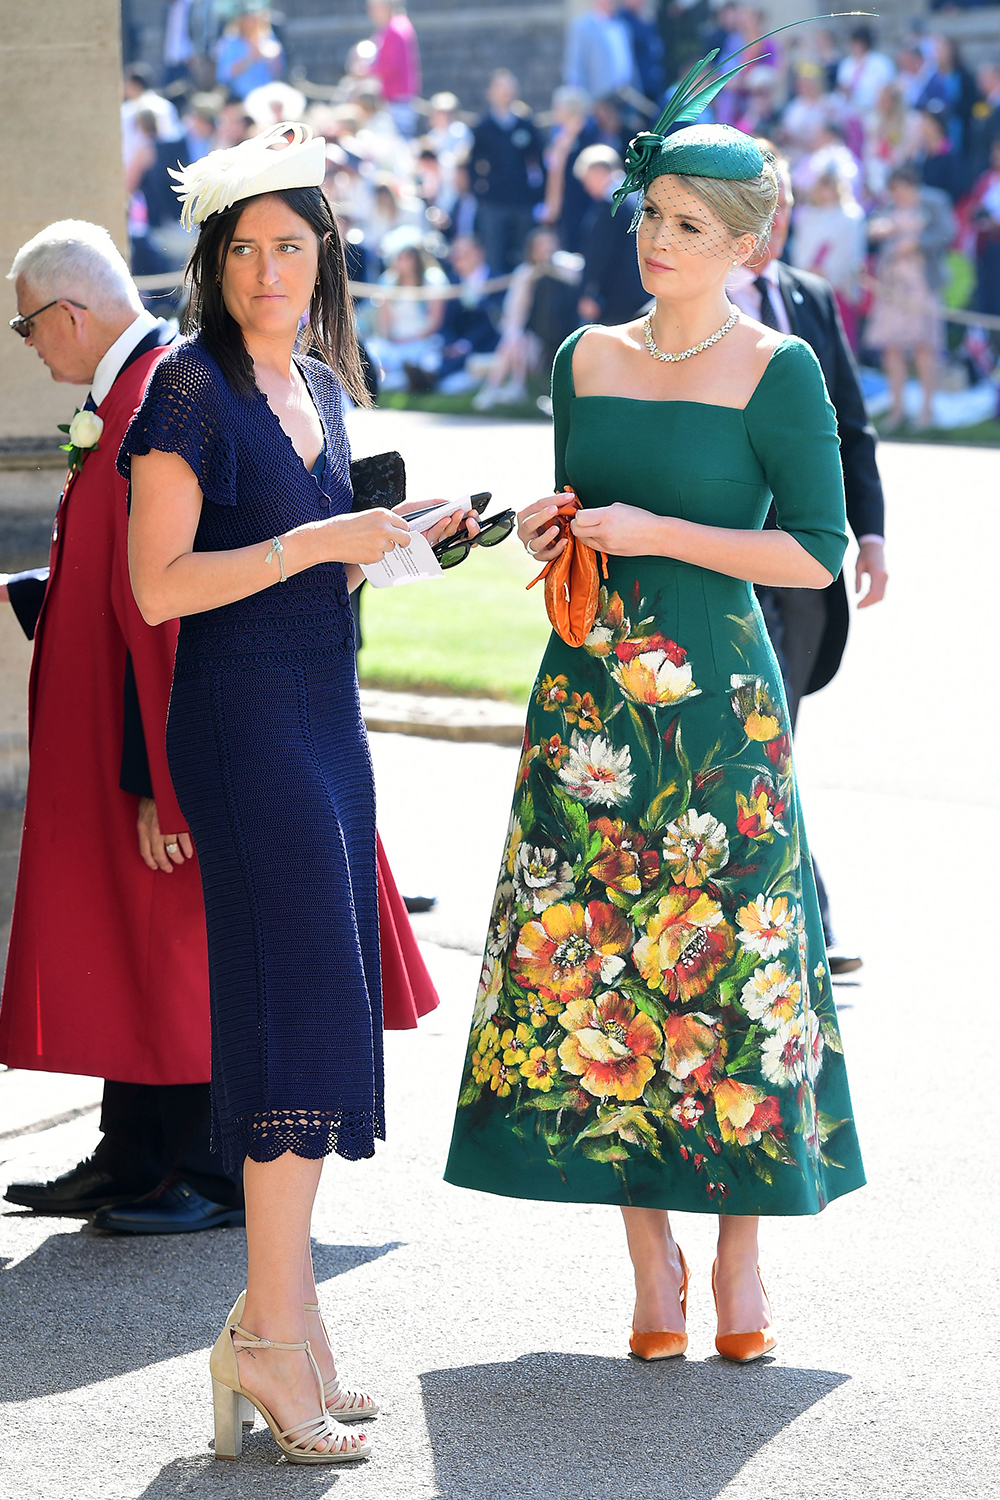 Image result for royal wedding guests 2018